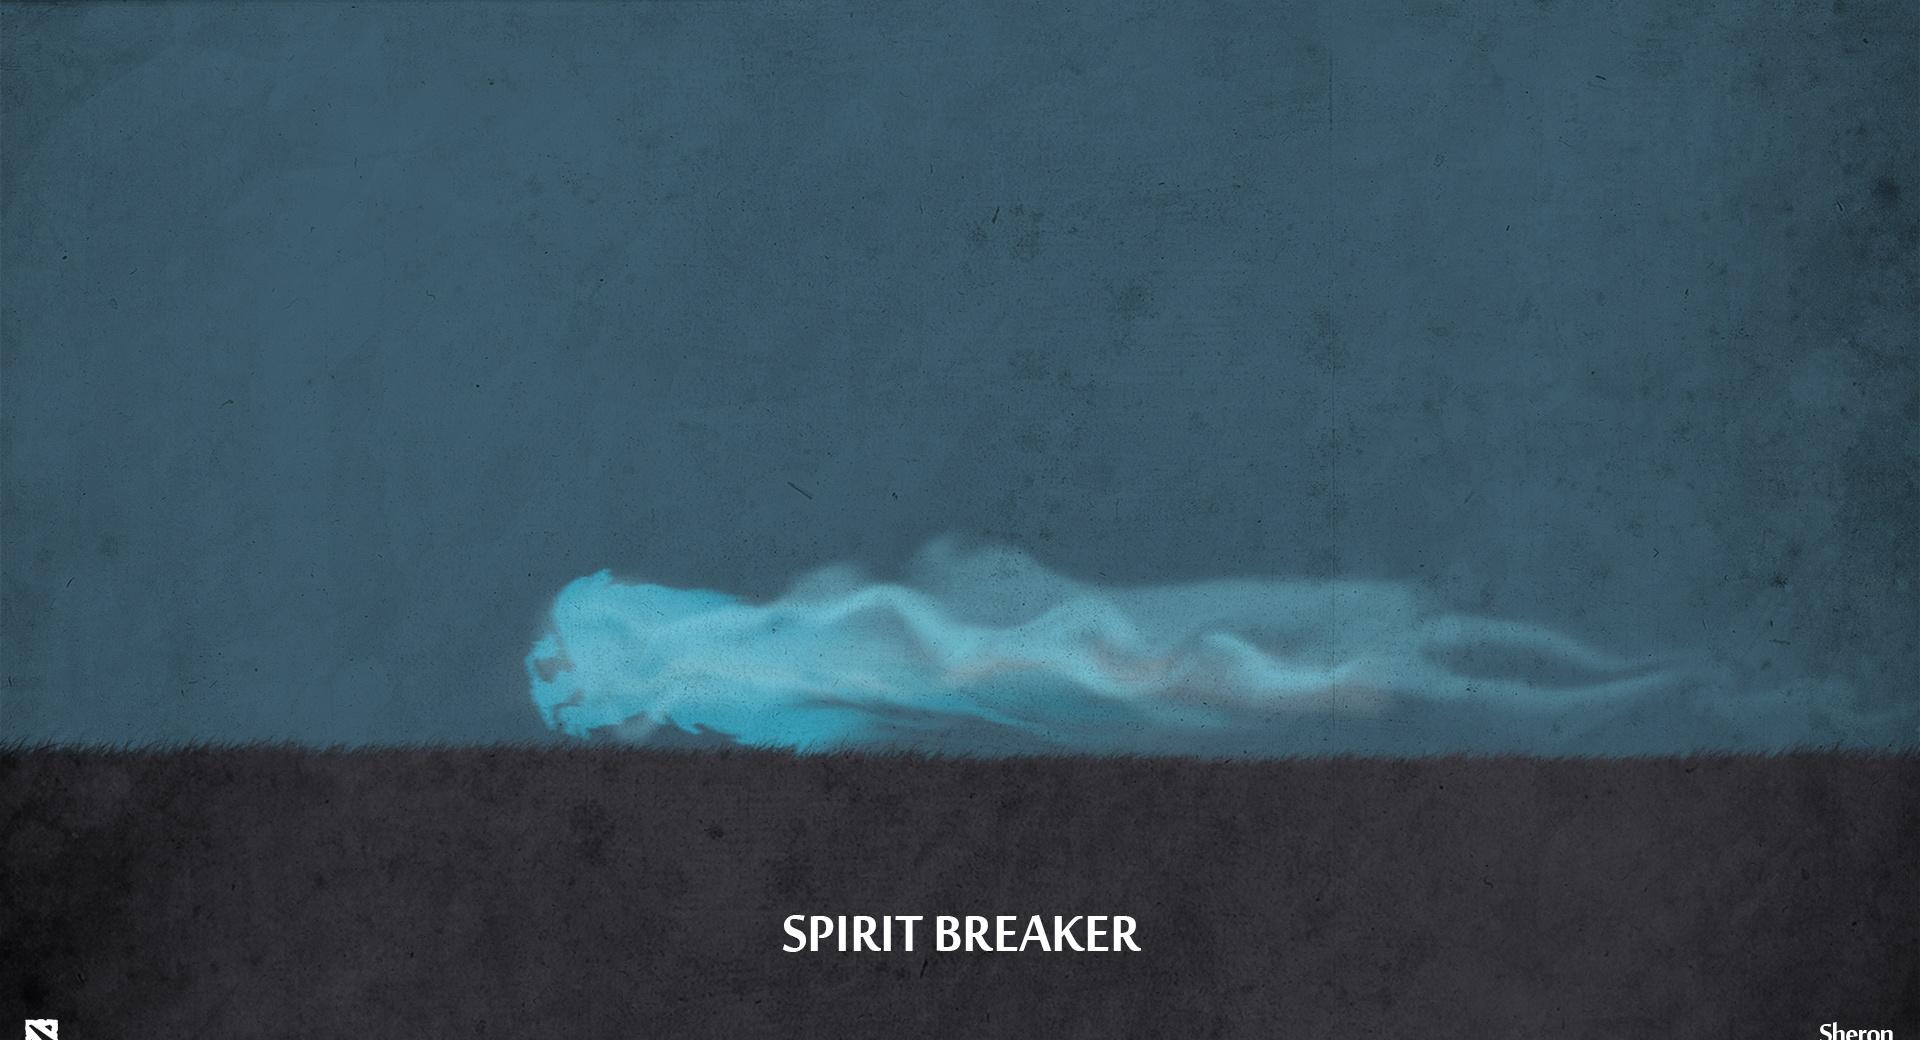 Spirit Breaker - DotA 2 at 2048 x 2048 iPad size wallpapers HD quality